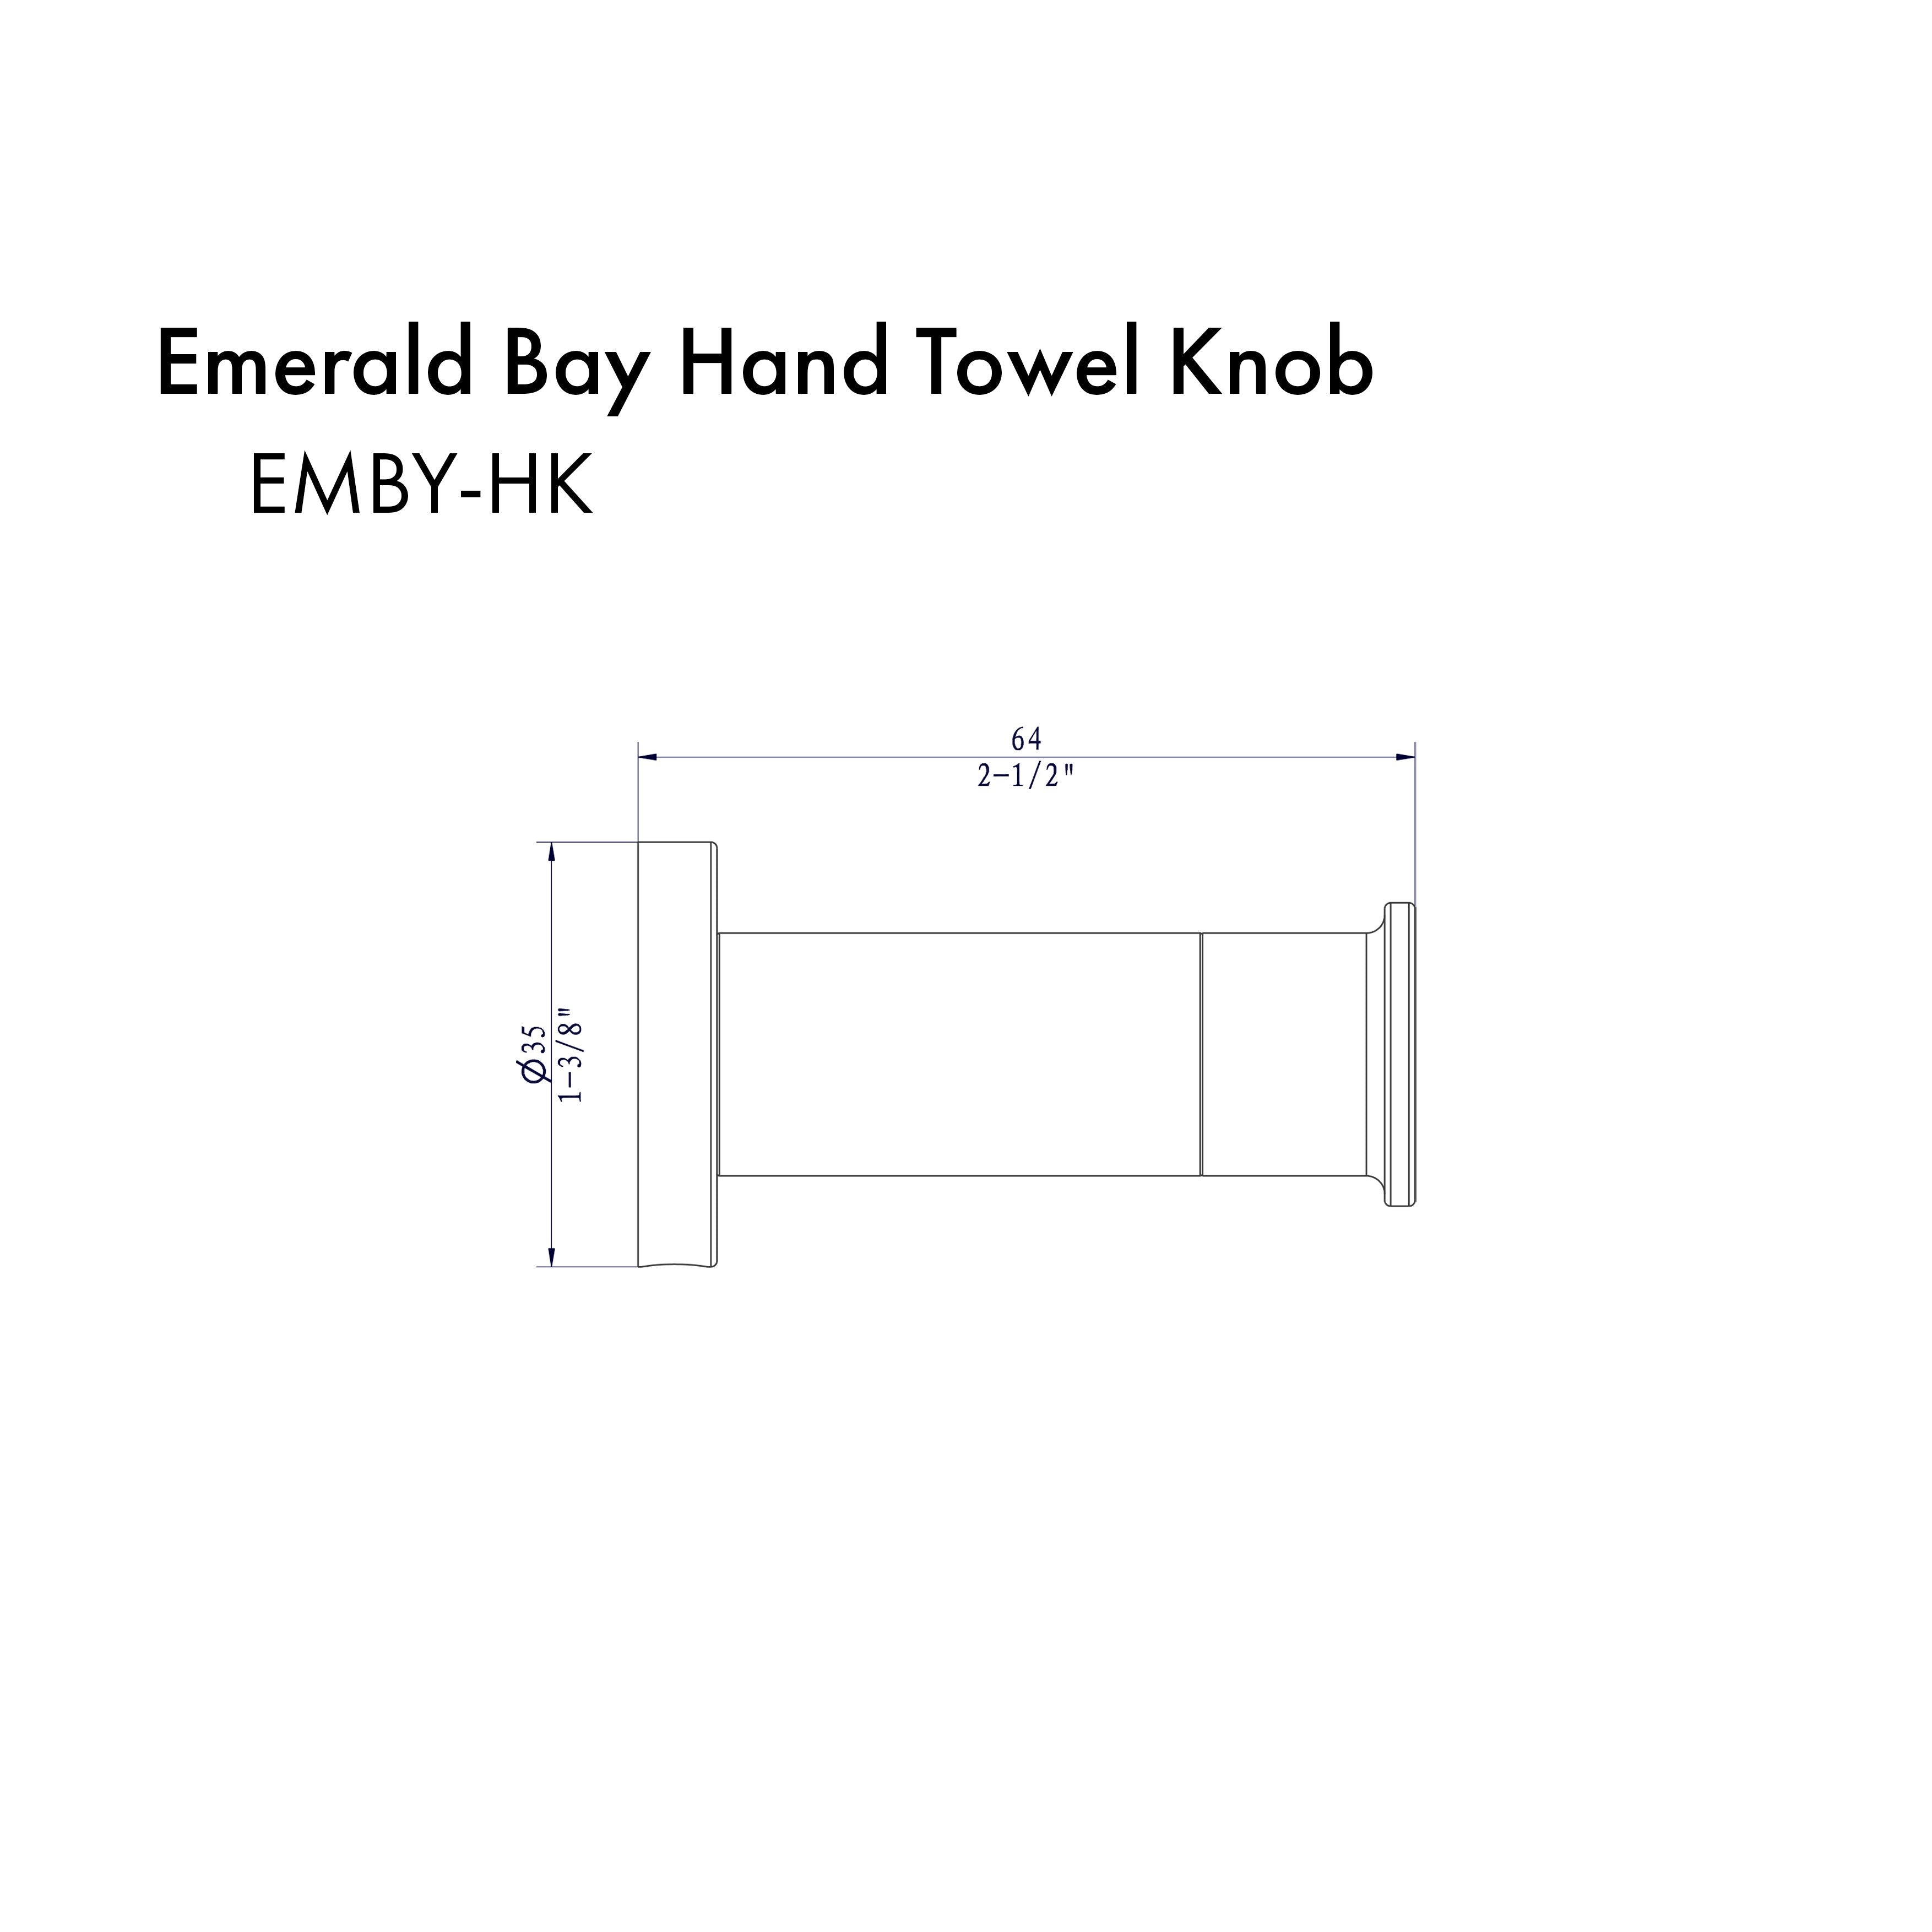 Therangehoodstore.com, ZLINE Emerald Bay Towel Hook with color options (EMBY-HK), EMBY-HK-BN,